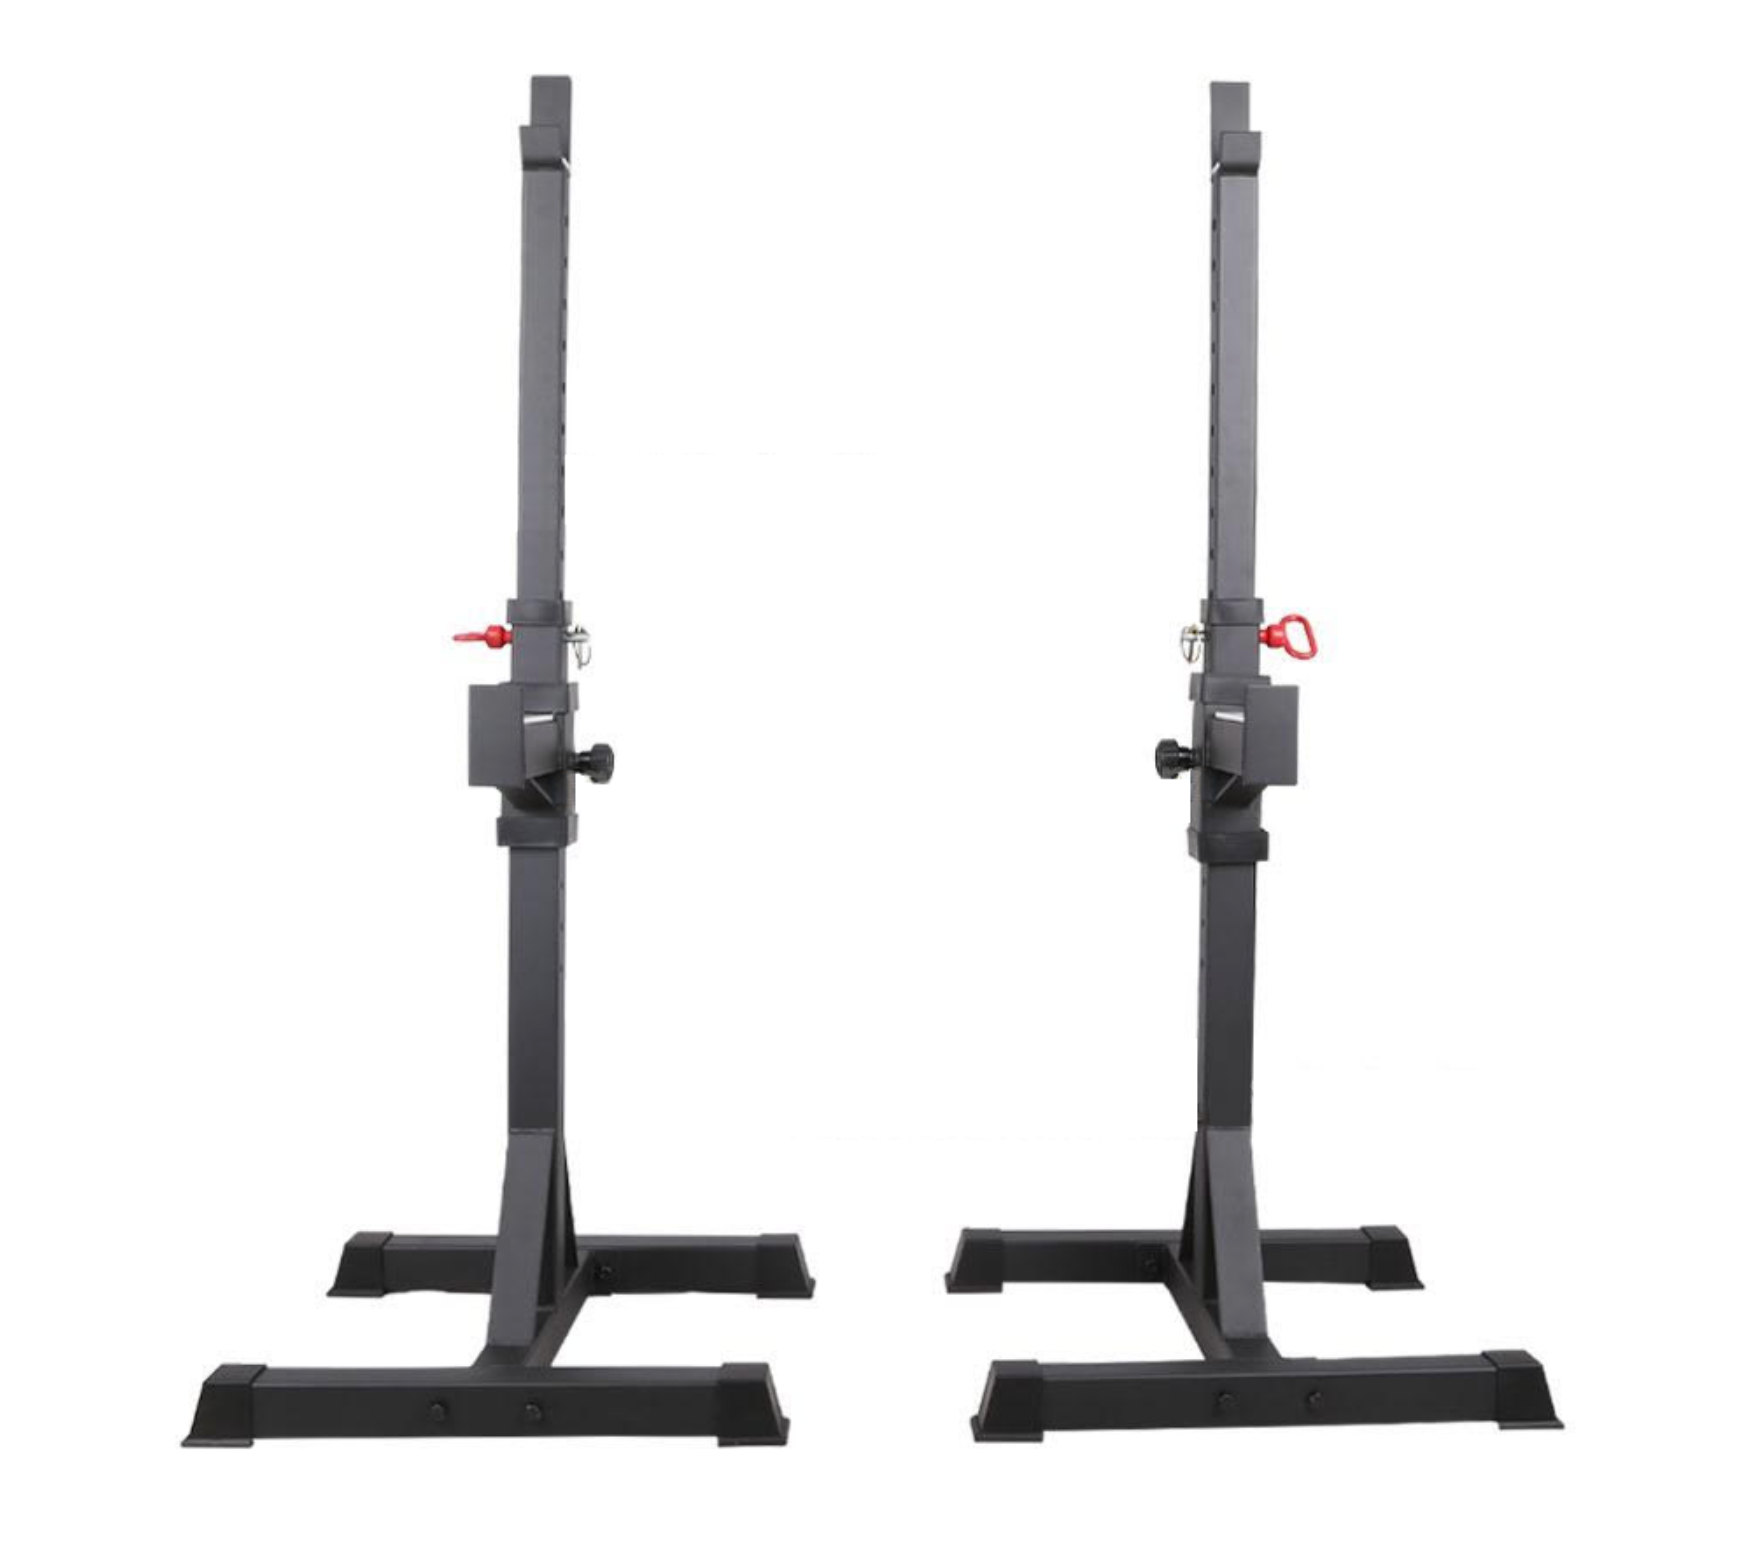 Portable Squat Rack Commercial Grade - 600kg Max Load - Fitness Hero Brand new